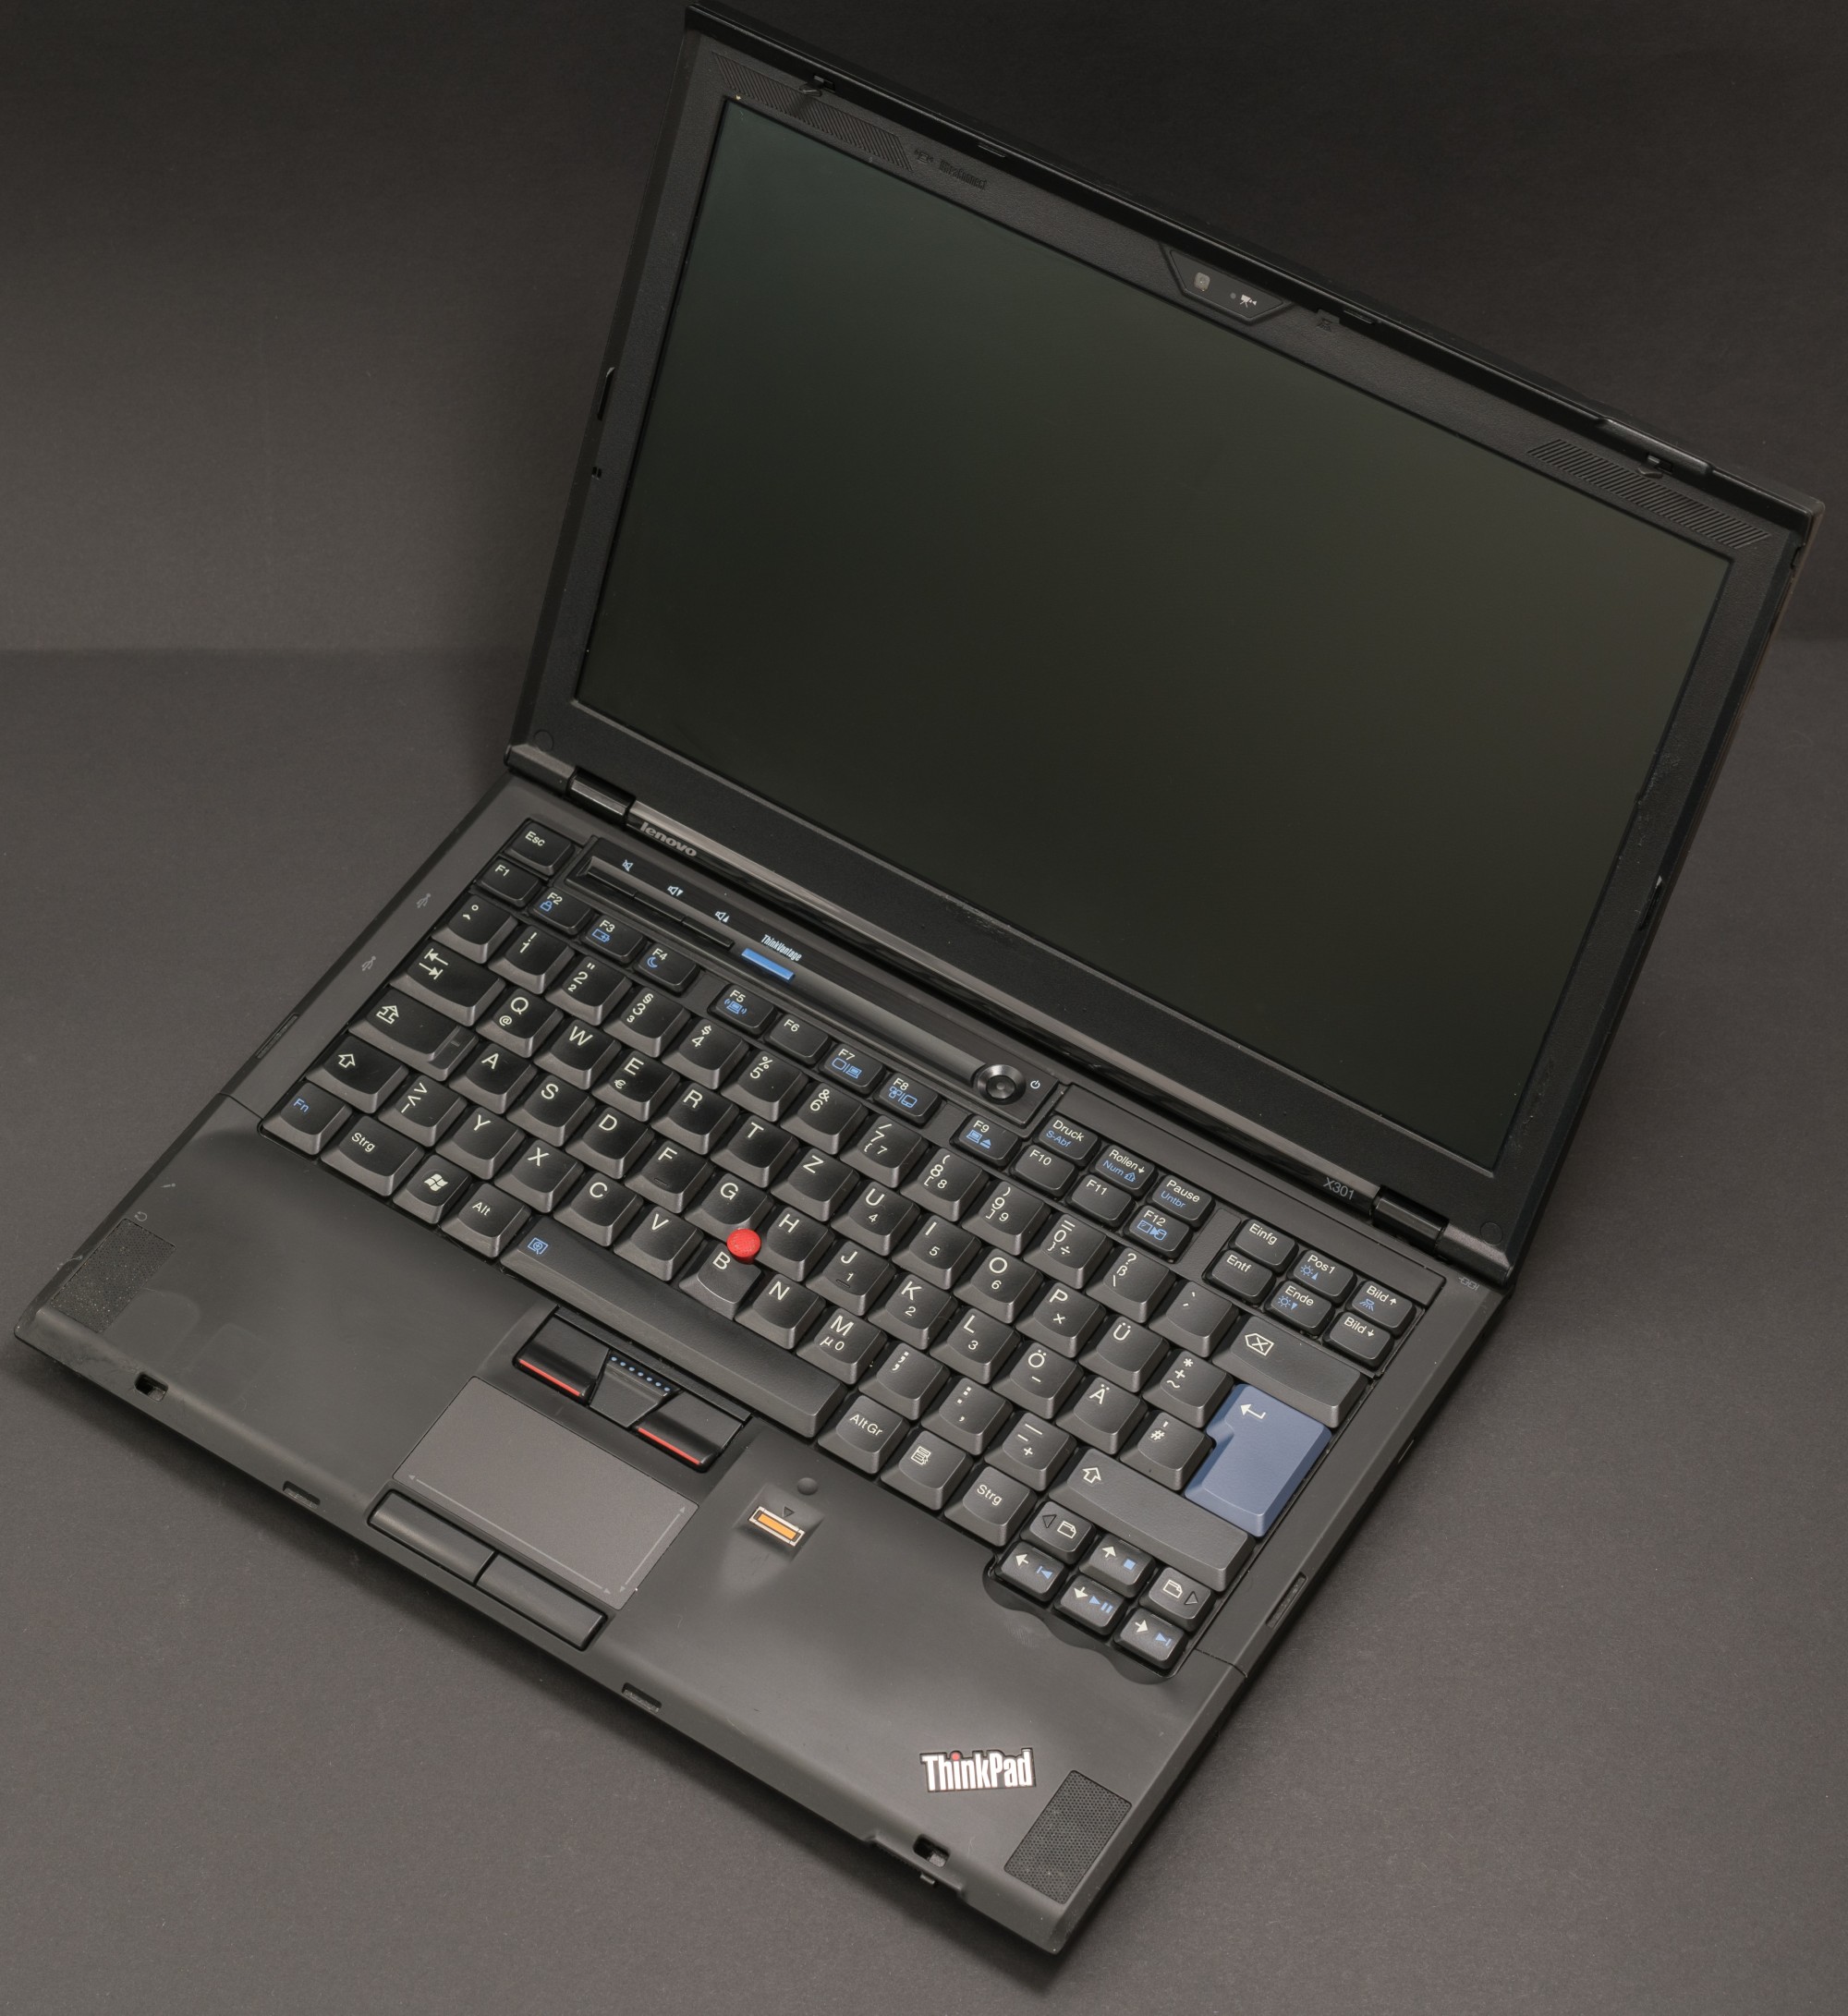 Древности: десять лет эволюции ноутбуков на примере ThinkPad X301 - 3